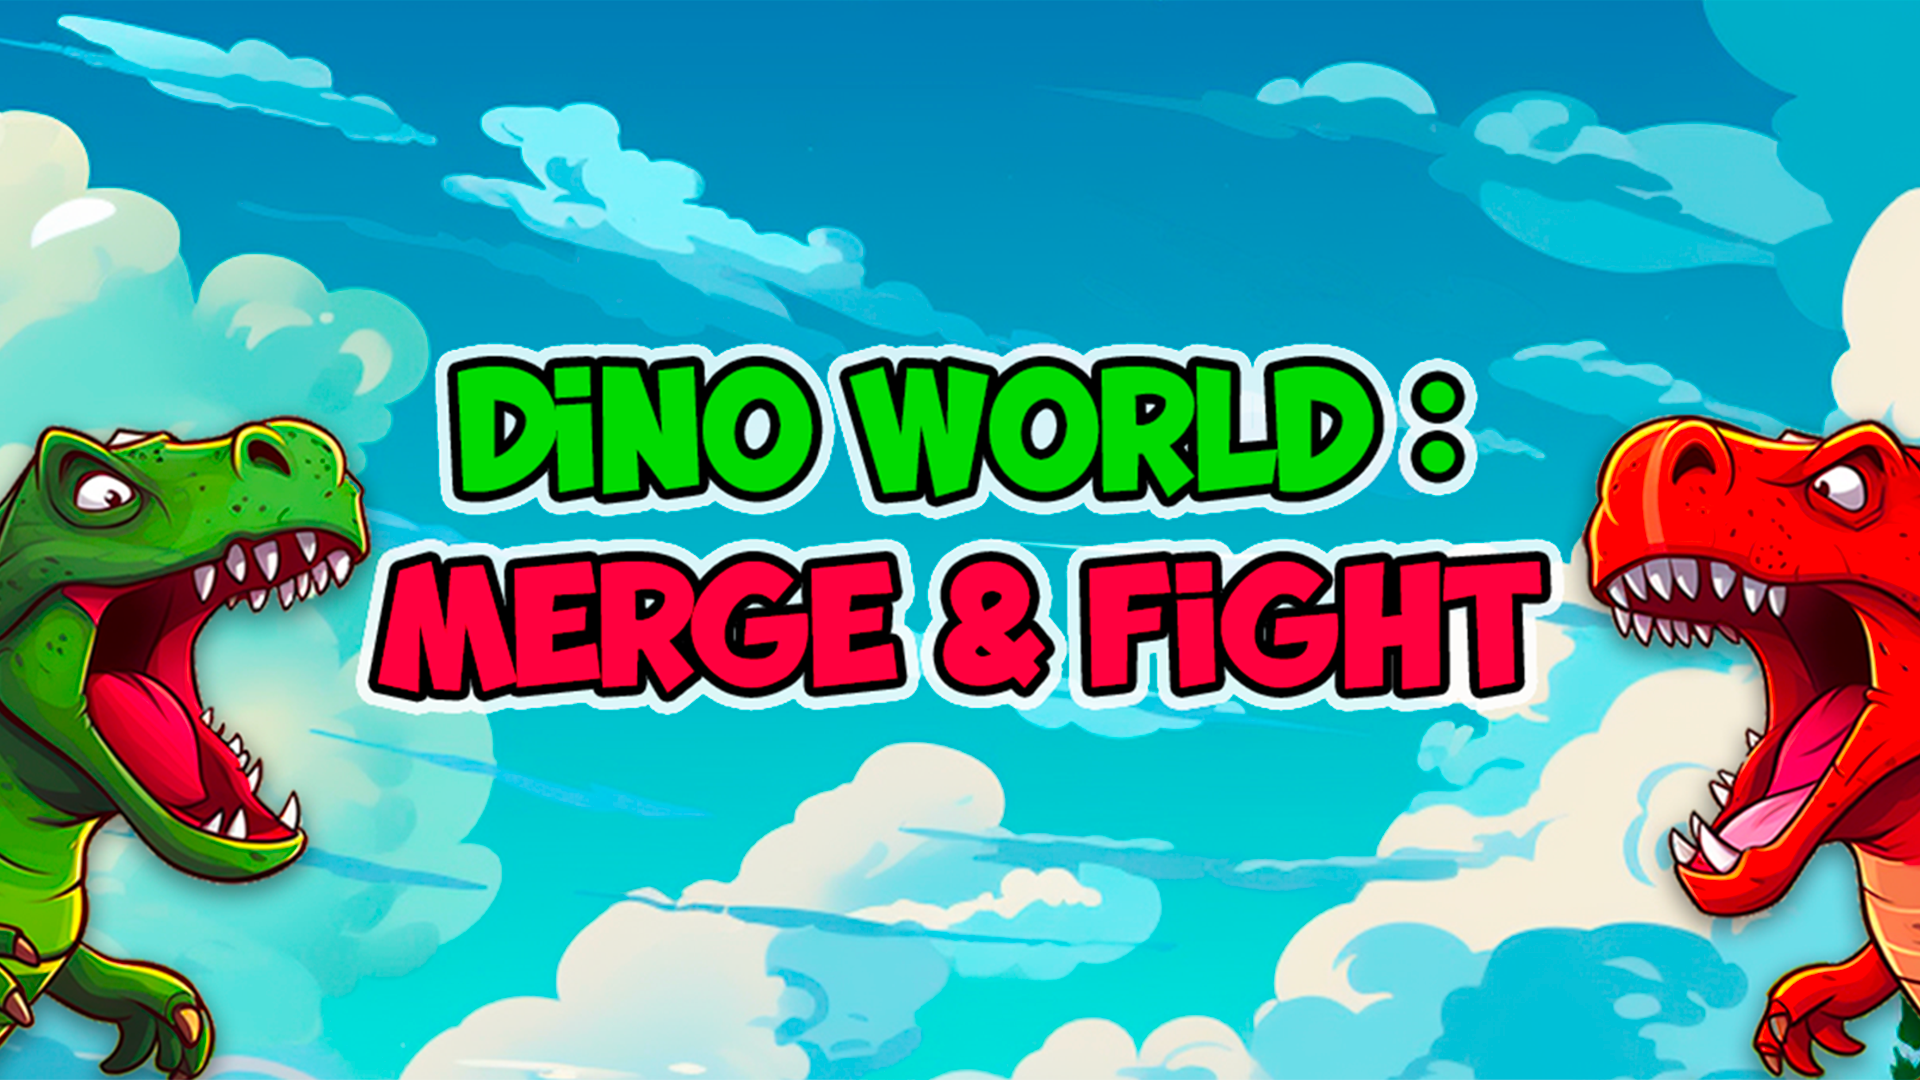 Dino World: Merge & Fight Game Image